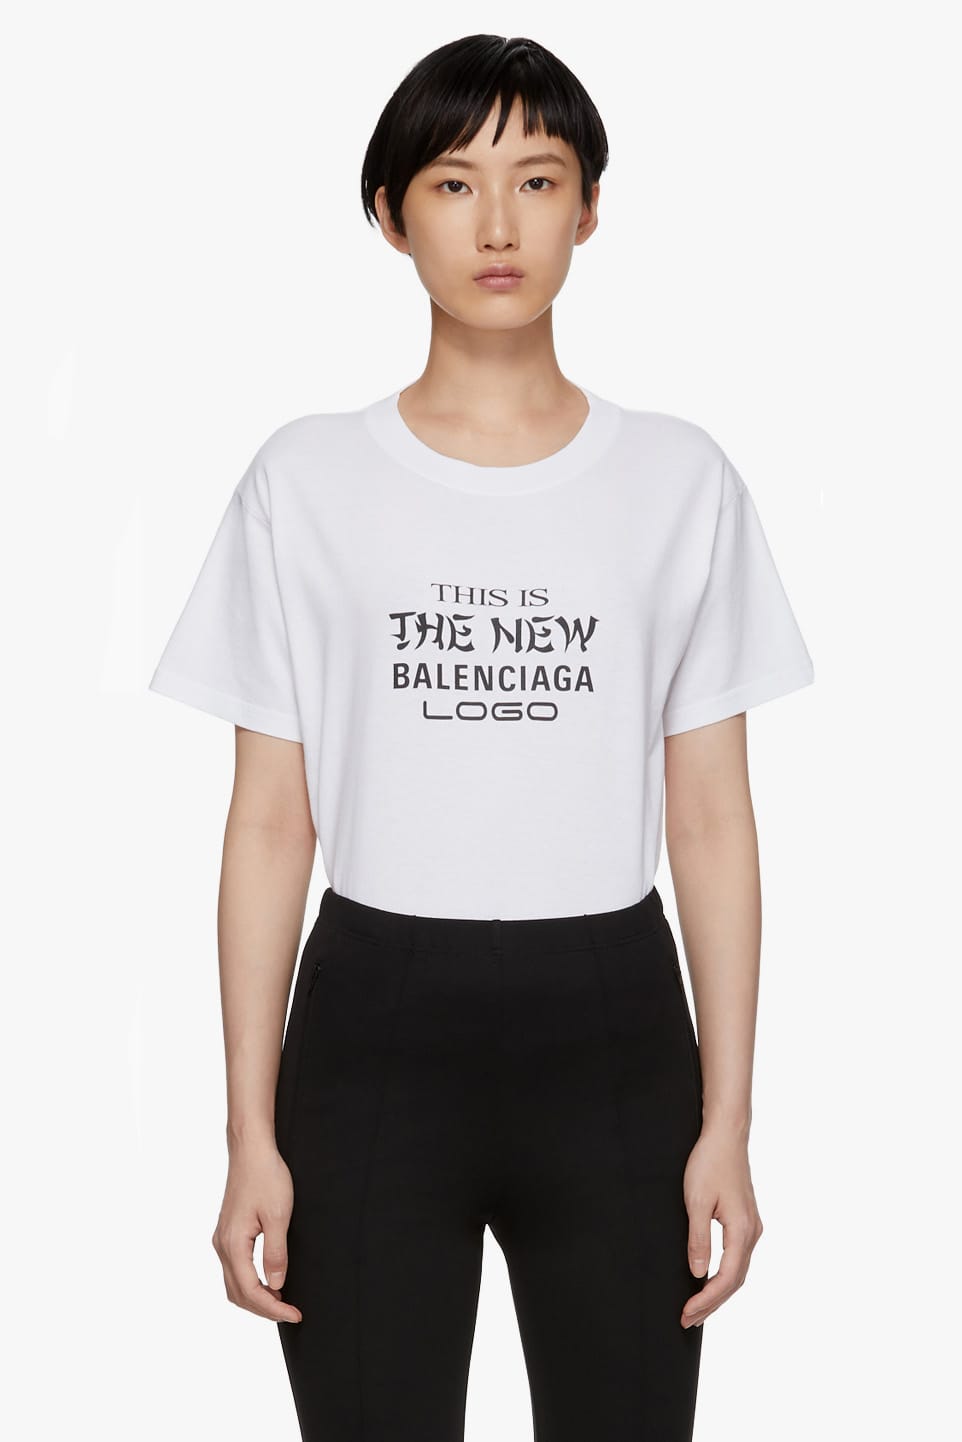 Balenciaga New Logo Tee Flash Sales, 58% OFF | www.ingeniovirtual.com